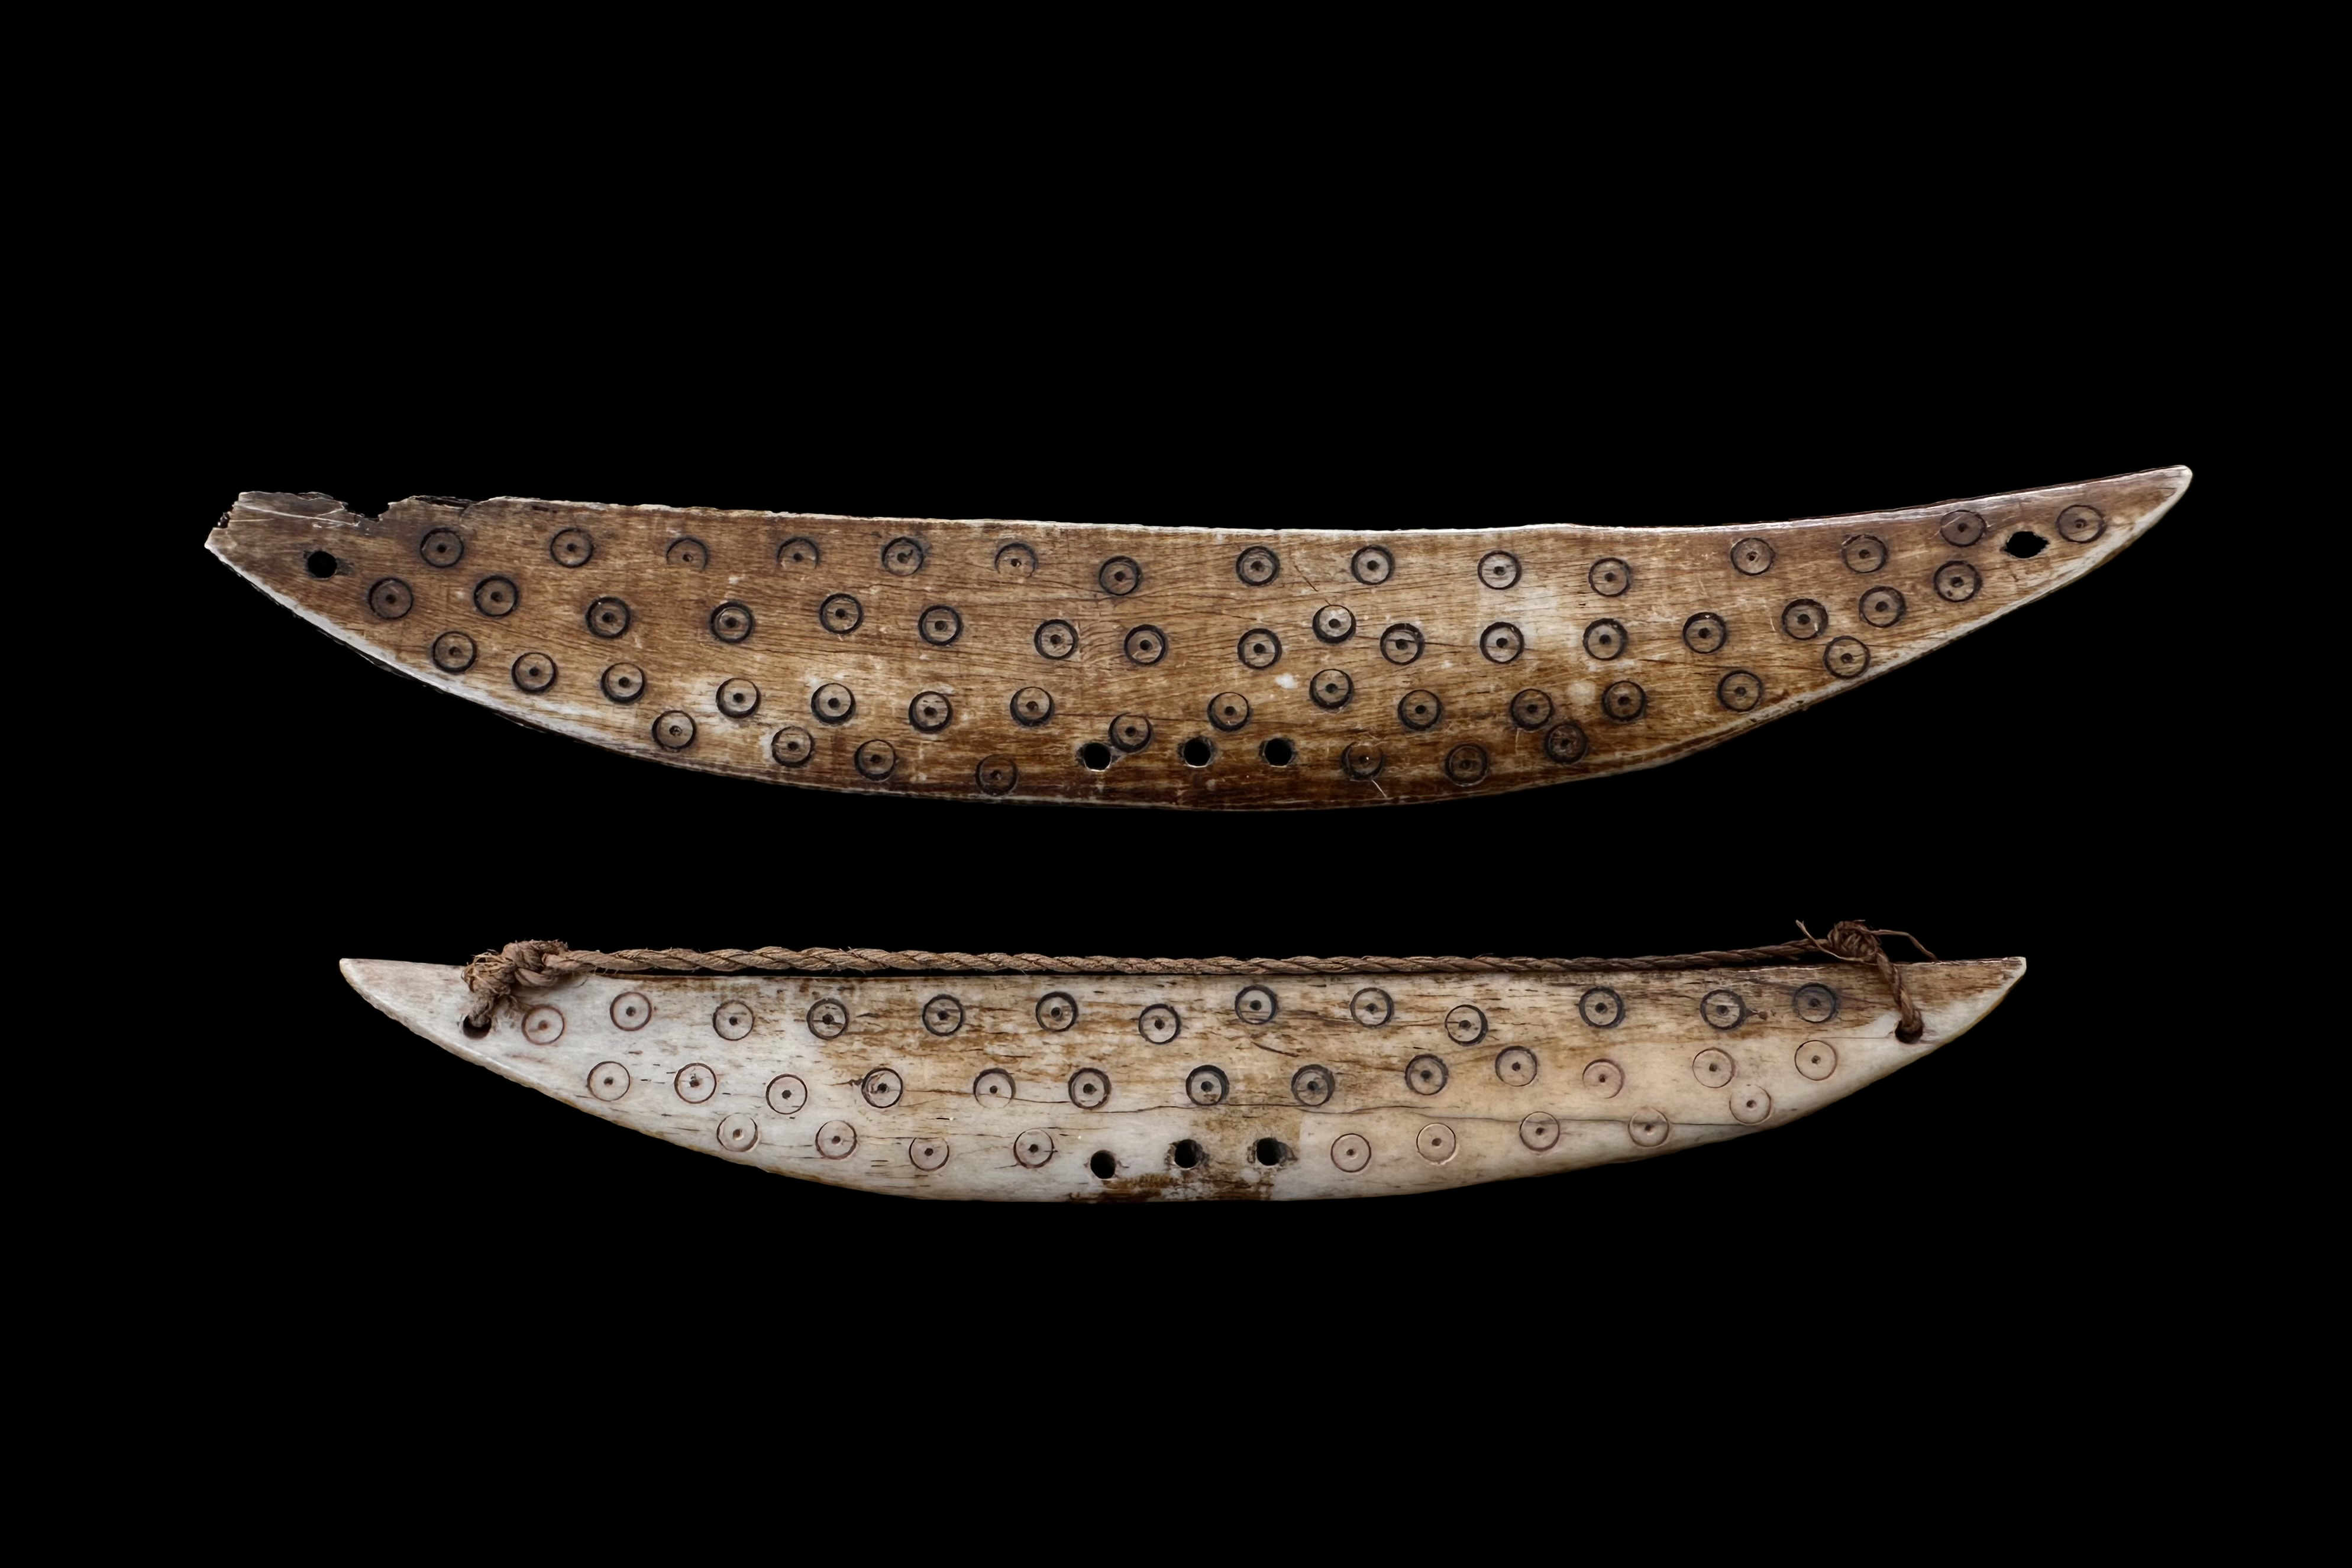 Horizontal Bone Pendant Beads - Lega People, D.R. Congo